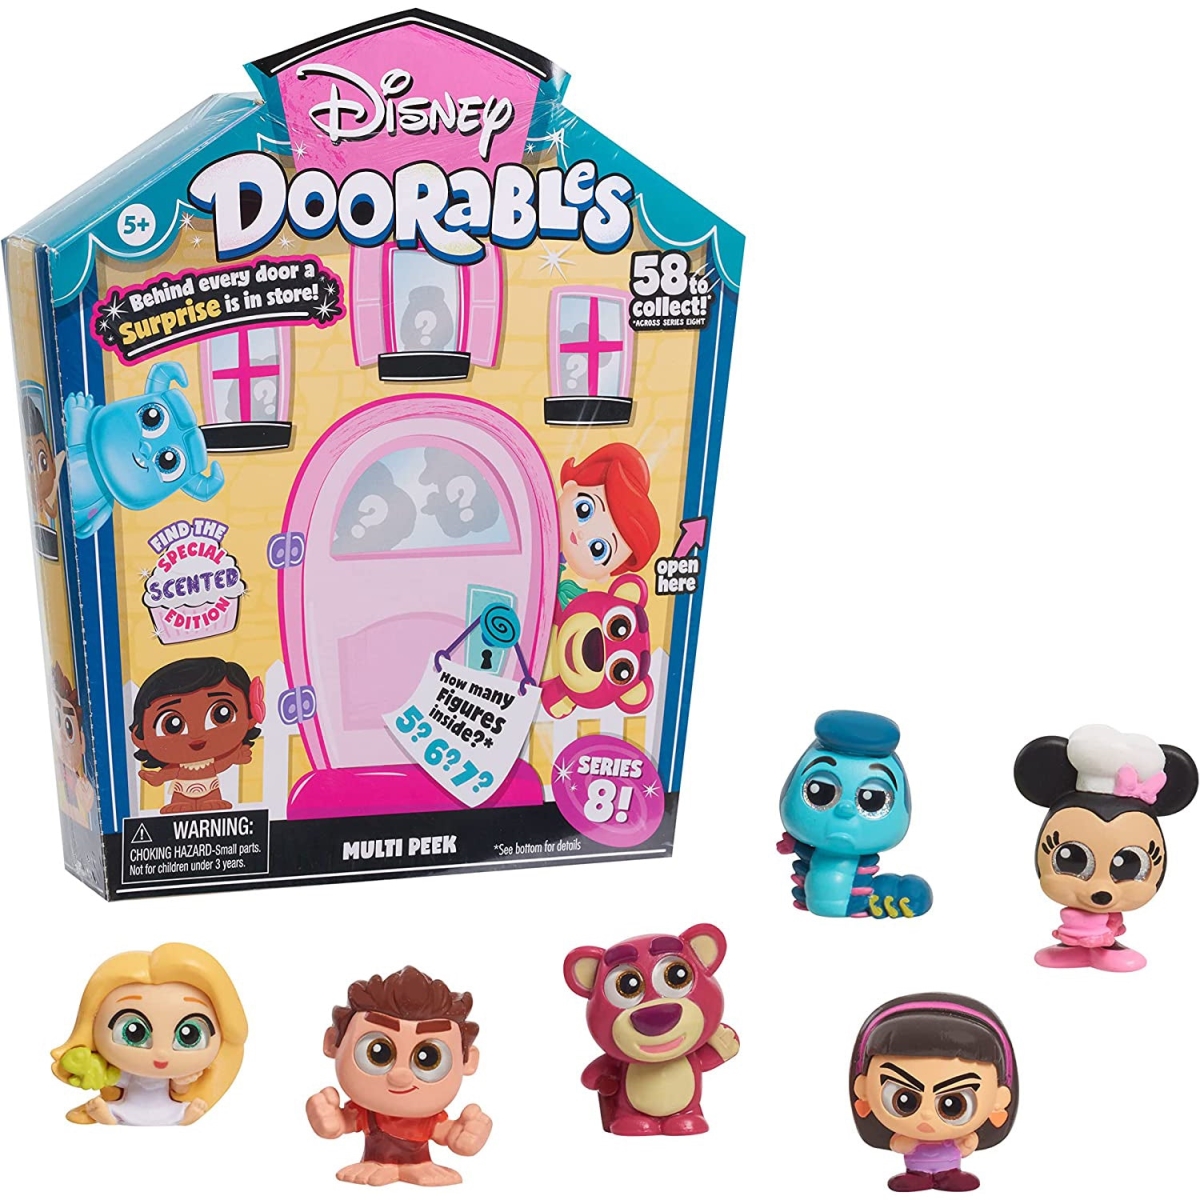 Disney 30390395 Doorables Multi Peek Series Scented Edition Figures - 8 Piece